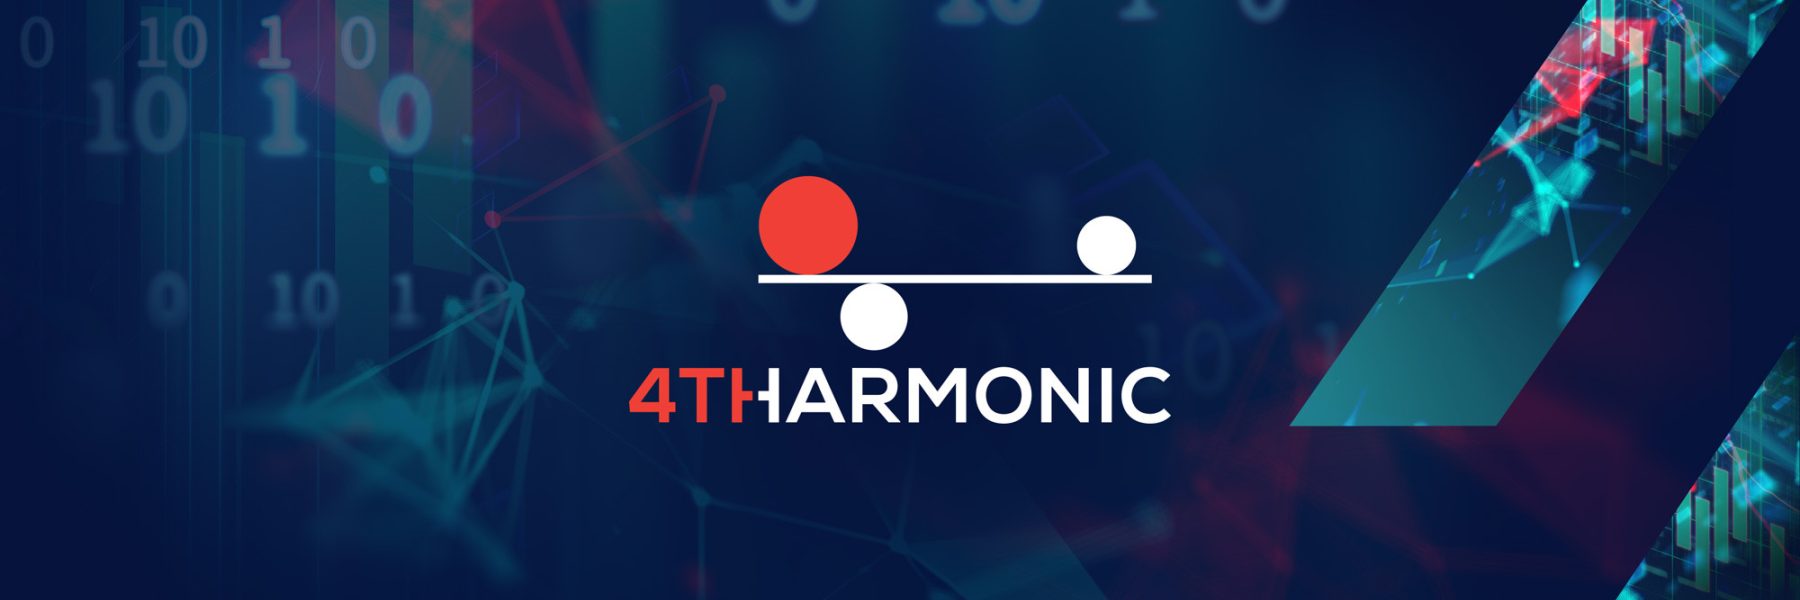 4th Harmonic header graphic design by quisk design